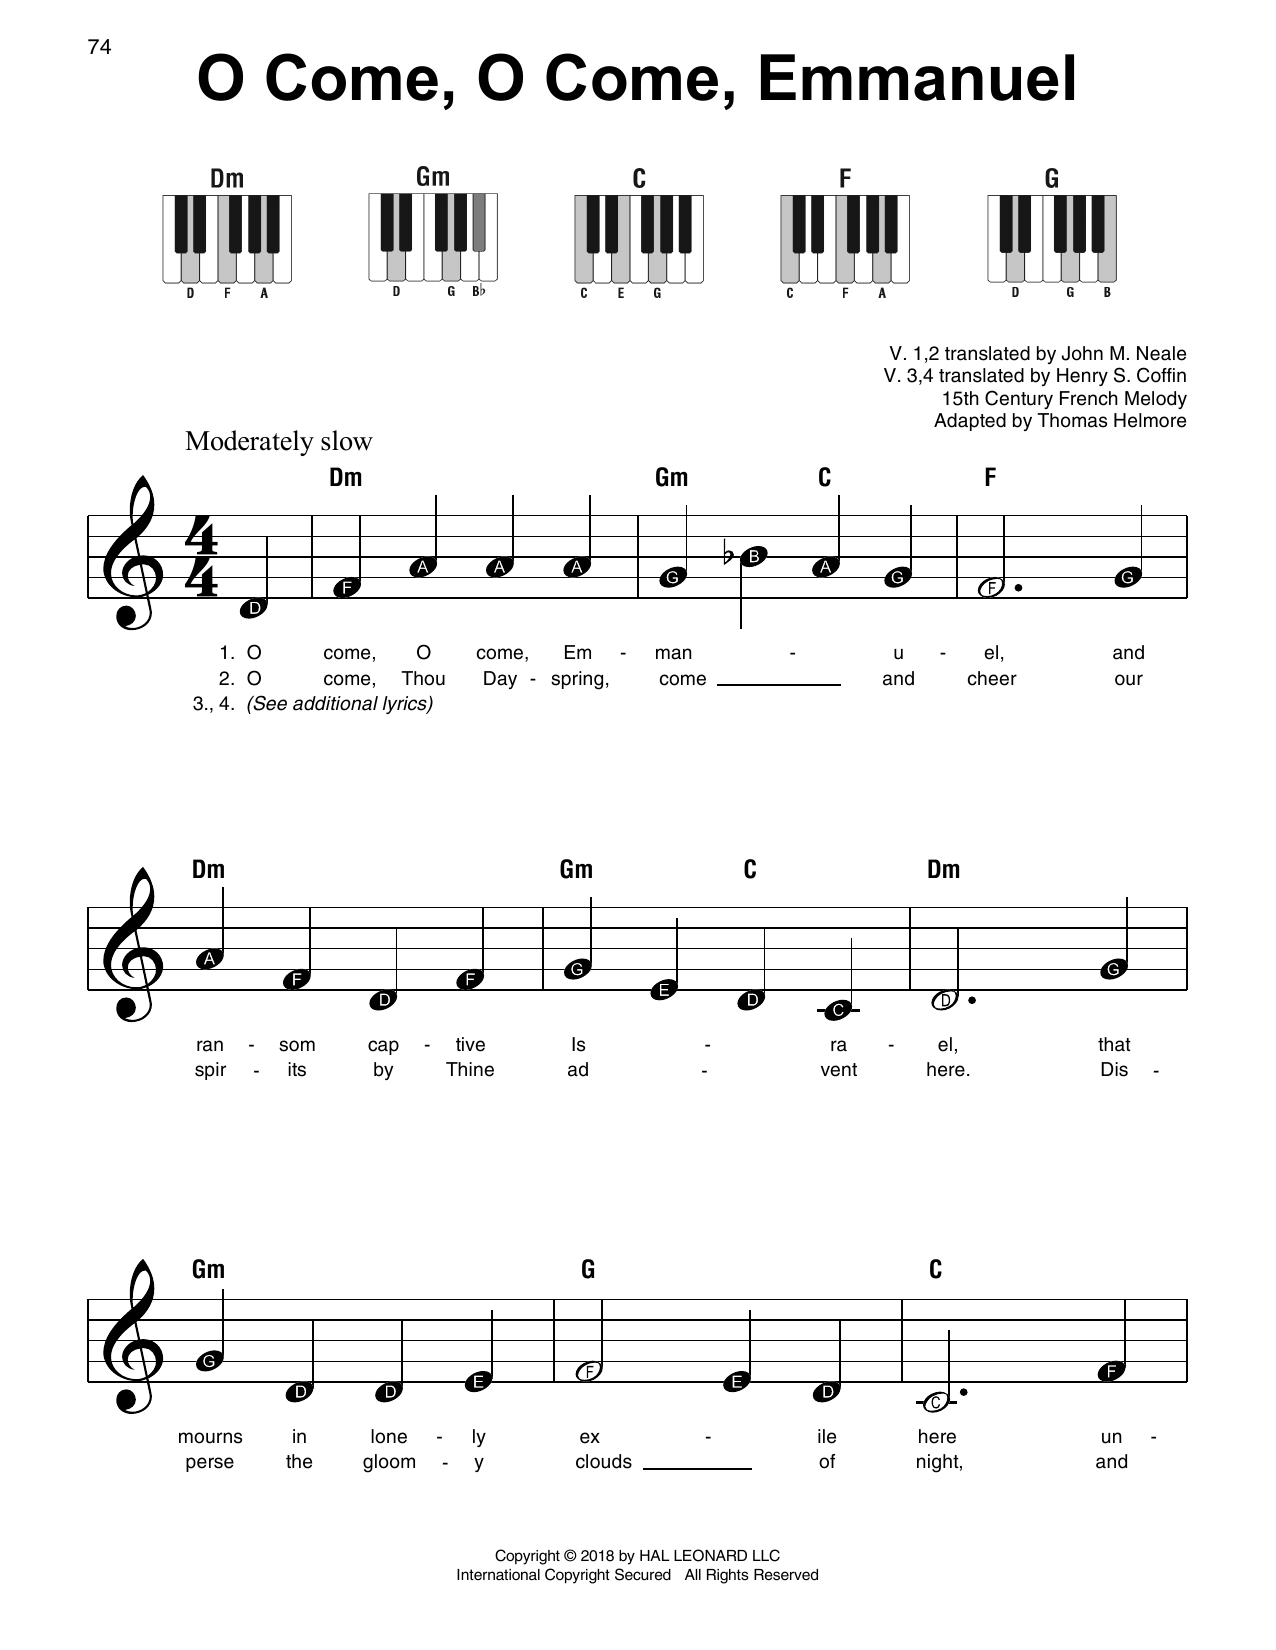 Christmas Carol O Come, O Come, Emmanuel Sheet Music Notes & Chords for Lyrics & Chords - Download or Print PDF